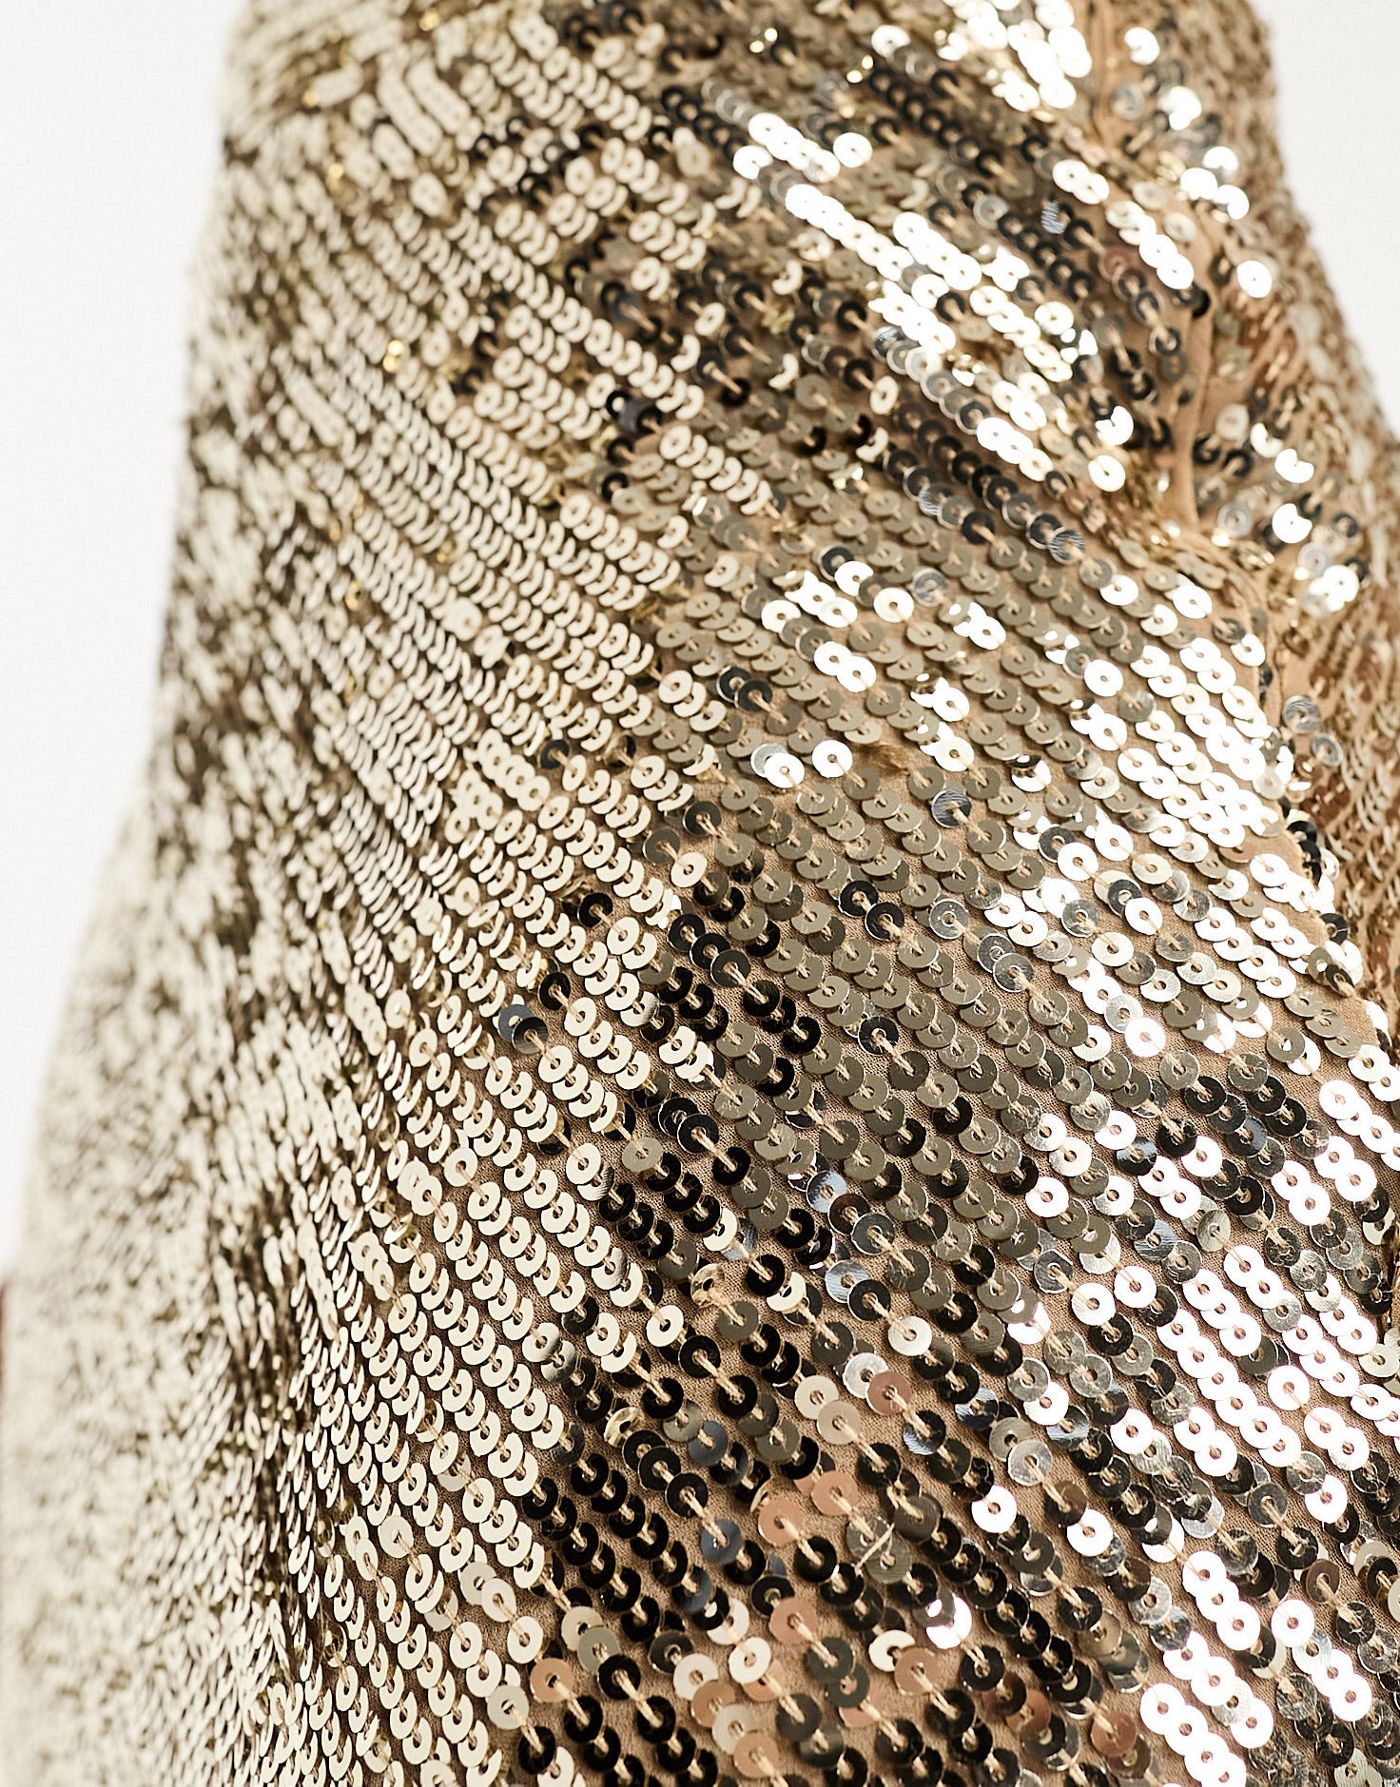 ASOS DESIGN sequin bias maxi skirt in gold